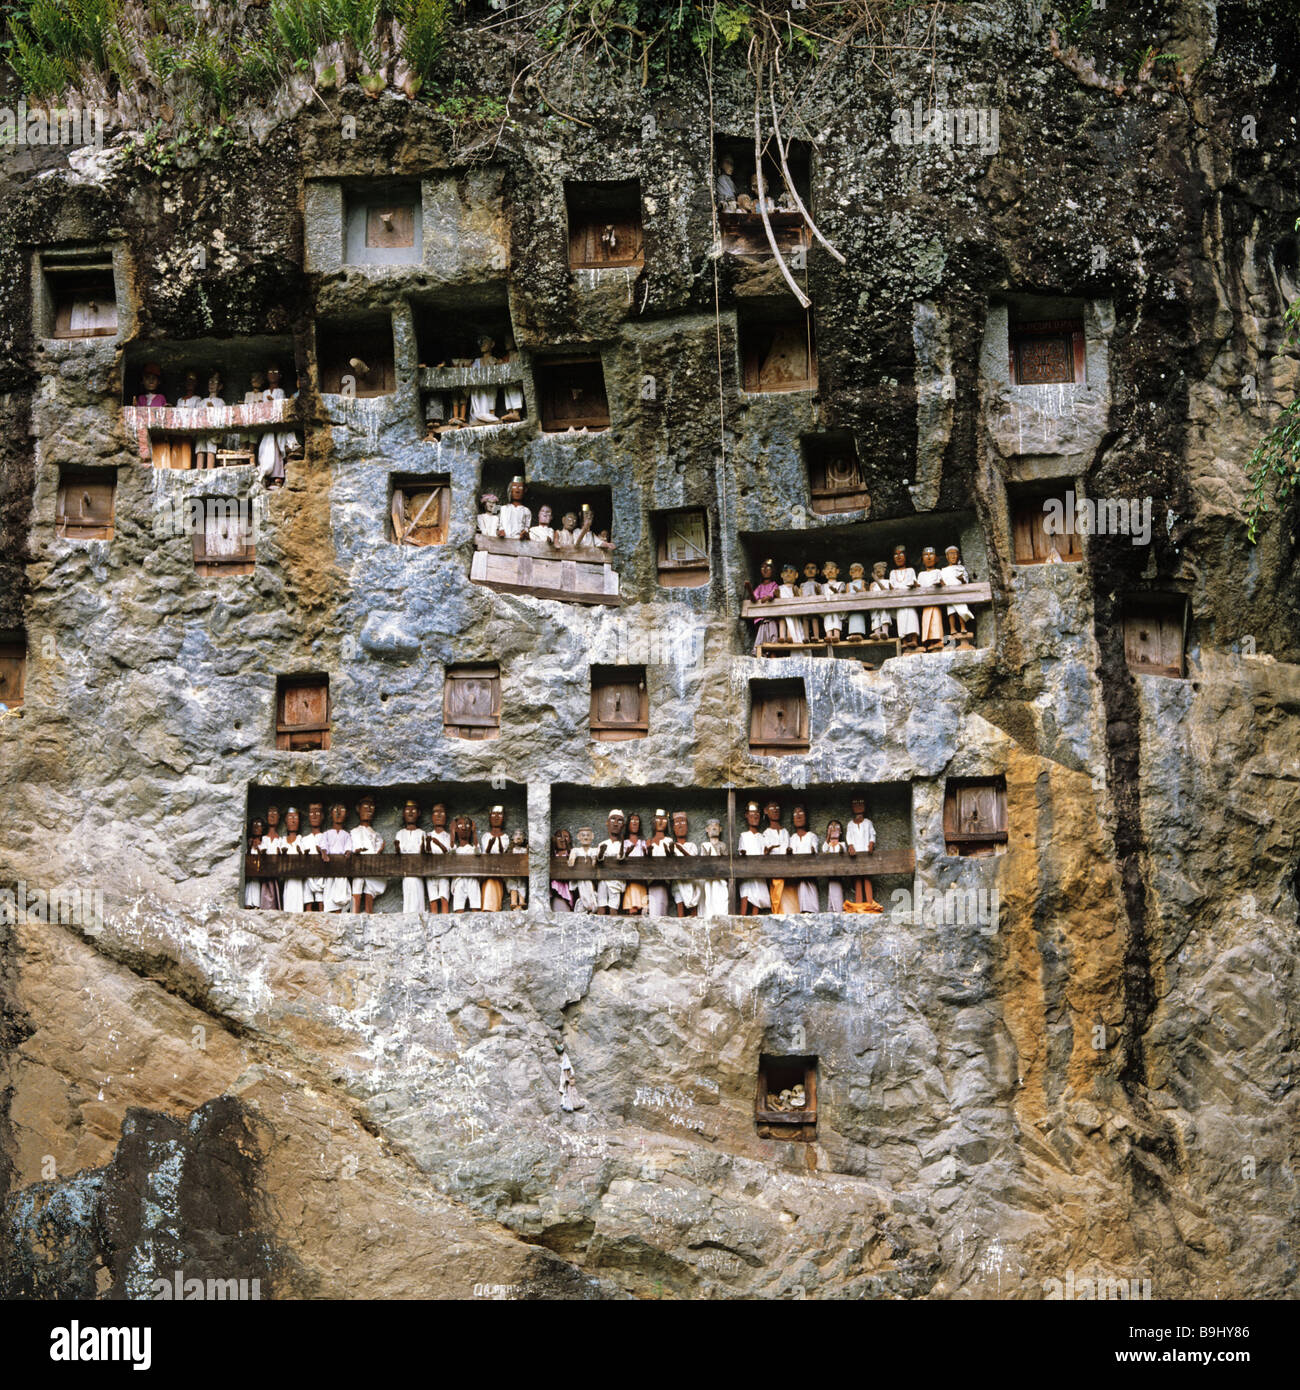 Toraja cliff tombs, Tau Tau ancestor worship, wodden figurines, Sulawesi, Indonesia, south-east Asia Stock Photo